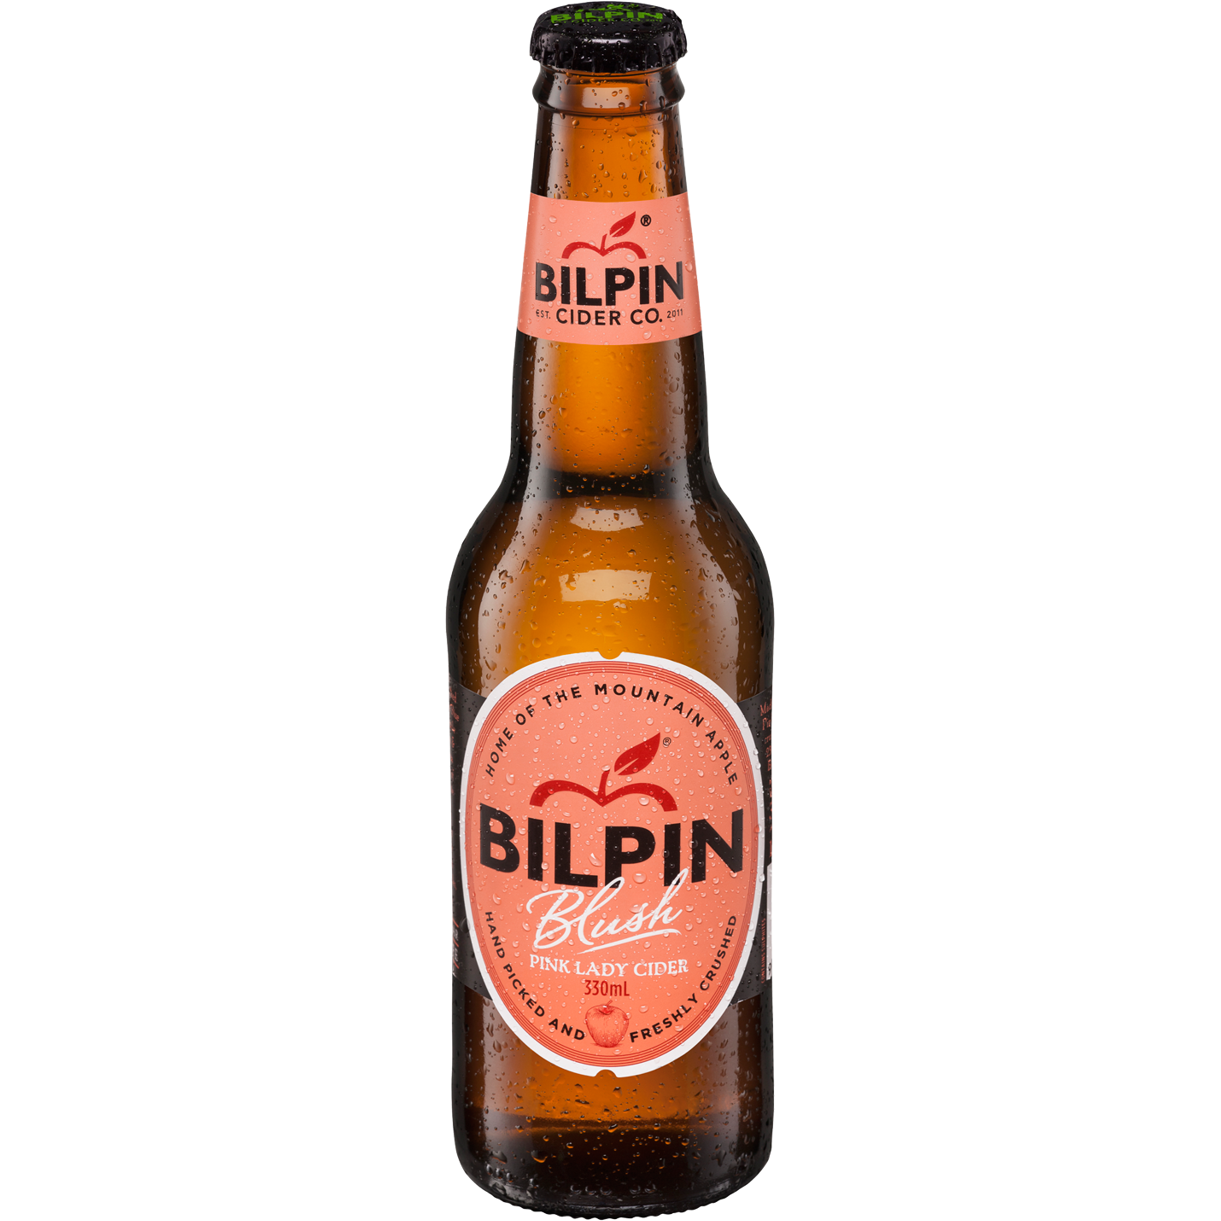 Bilpin Blush Pink Lady Cider